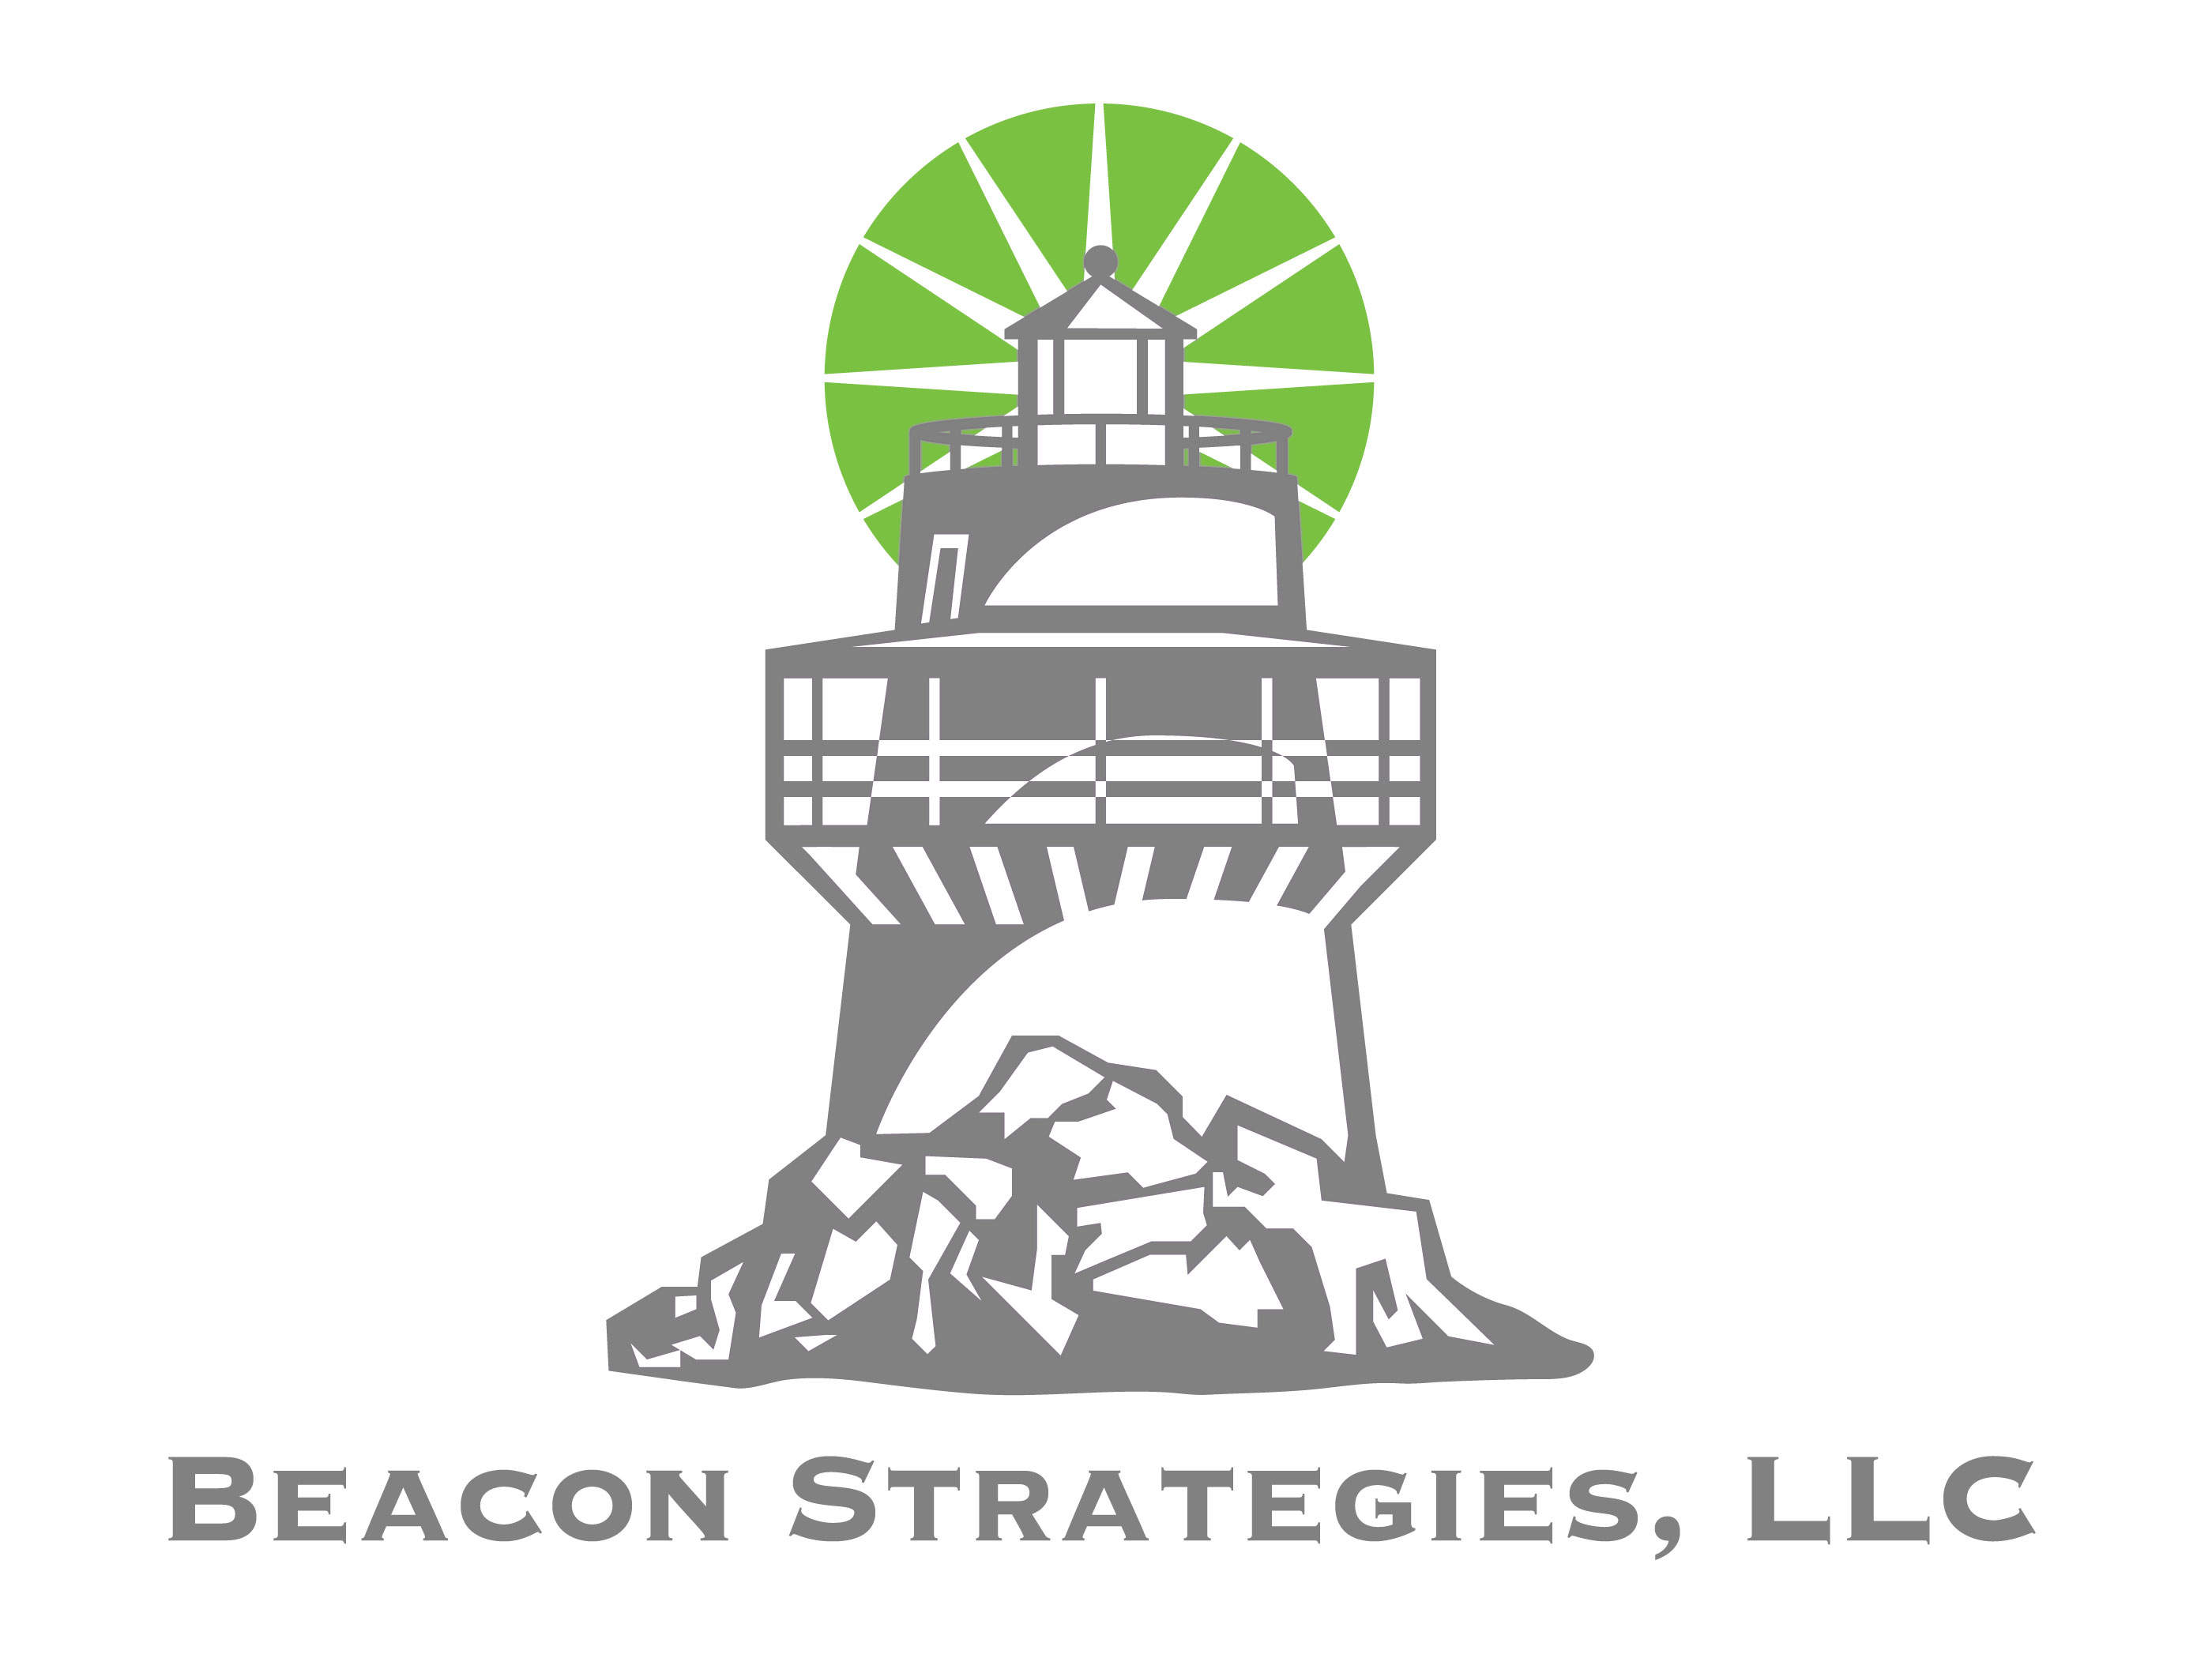 Beacon Strategies, LLC logo